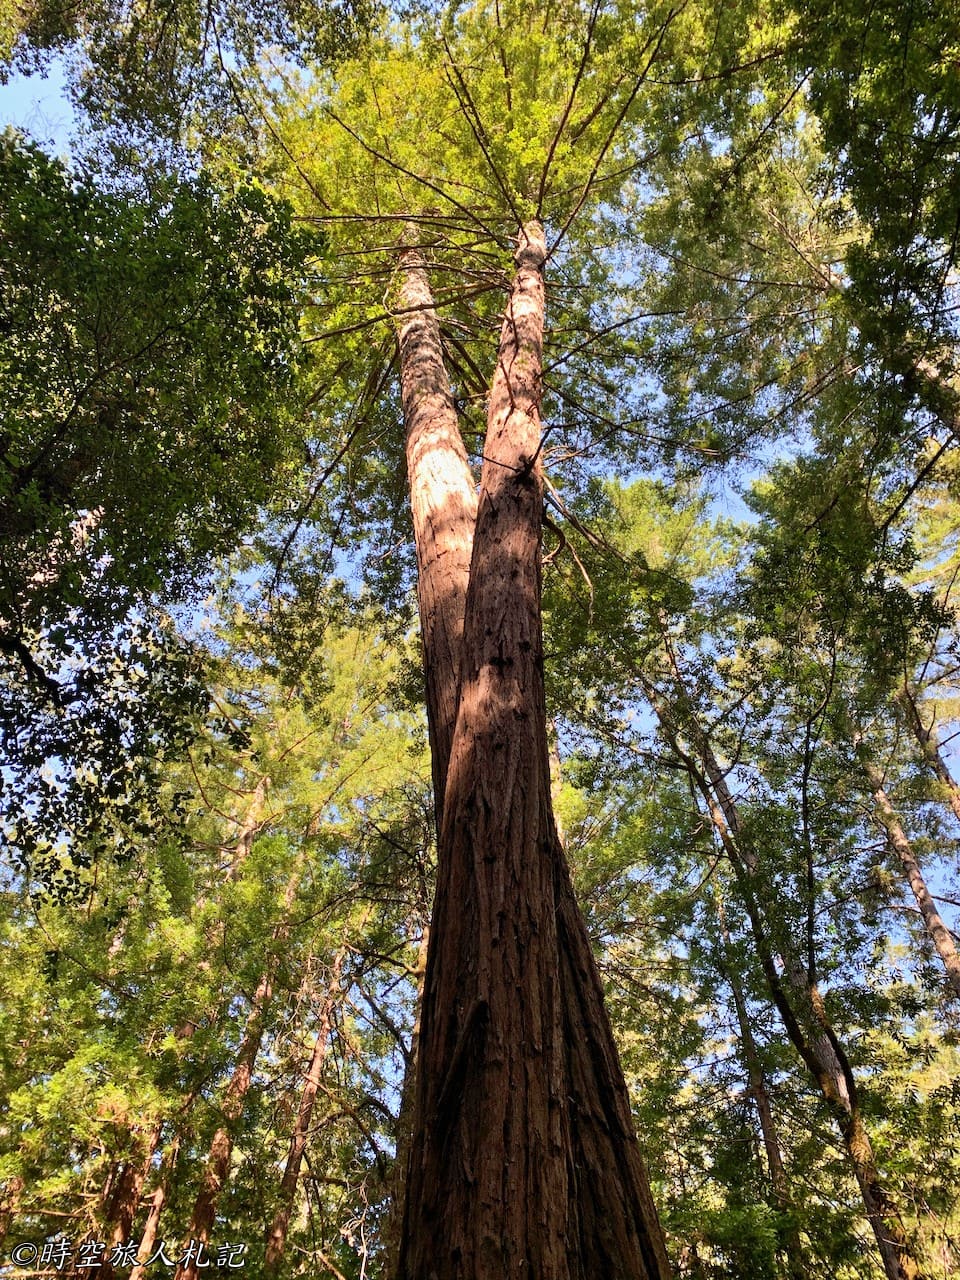 Portola redwood state park 10